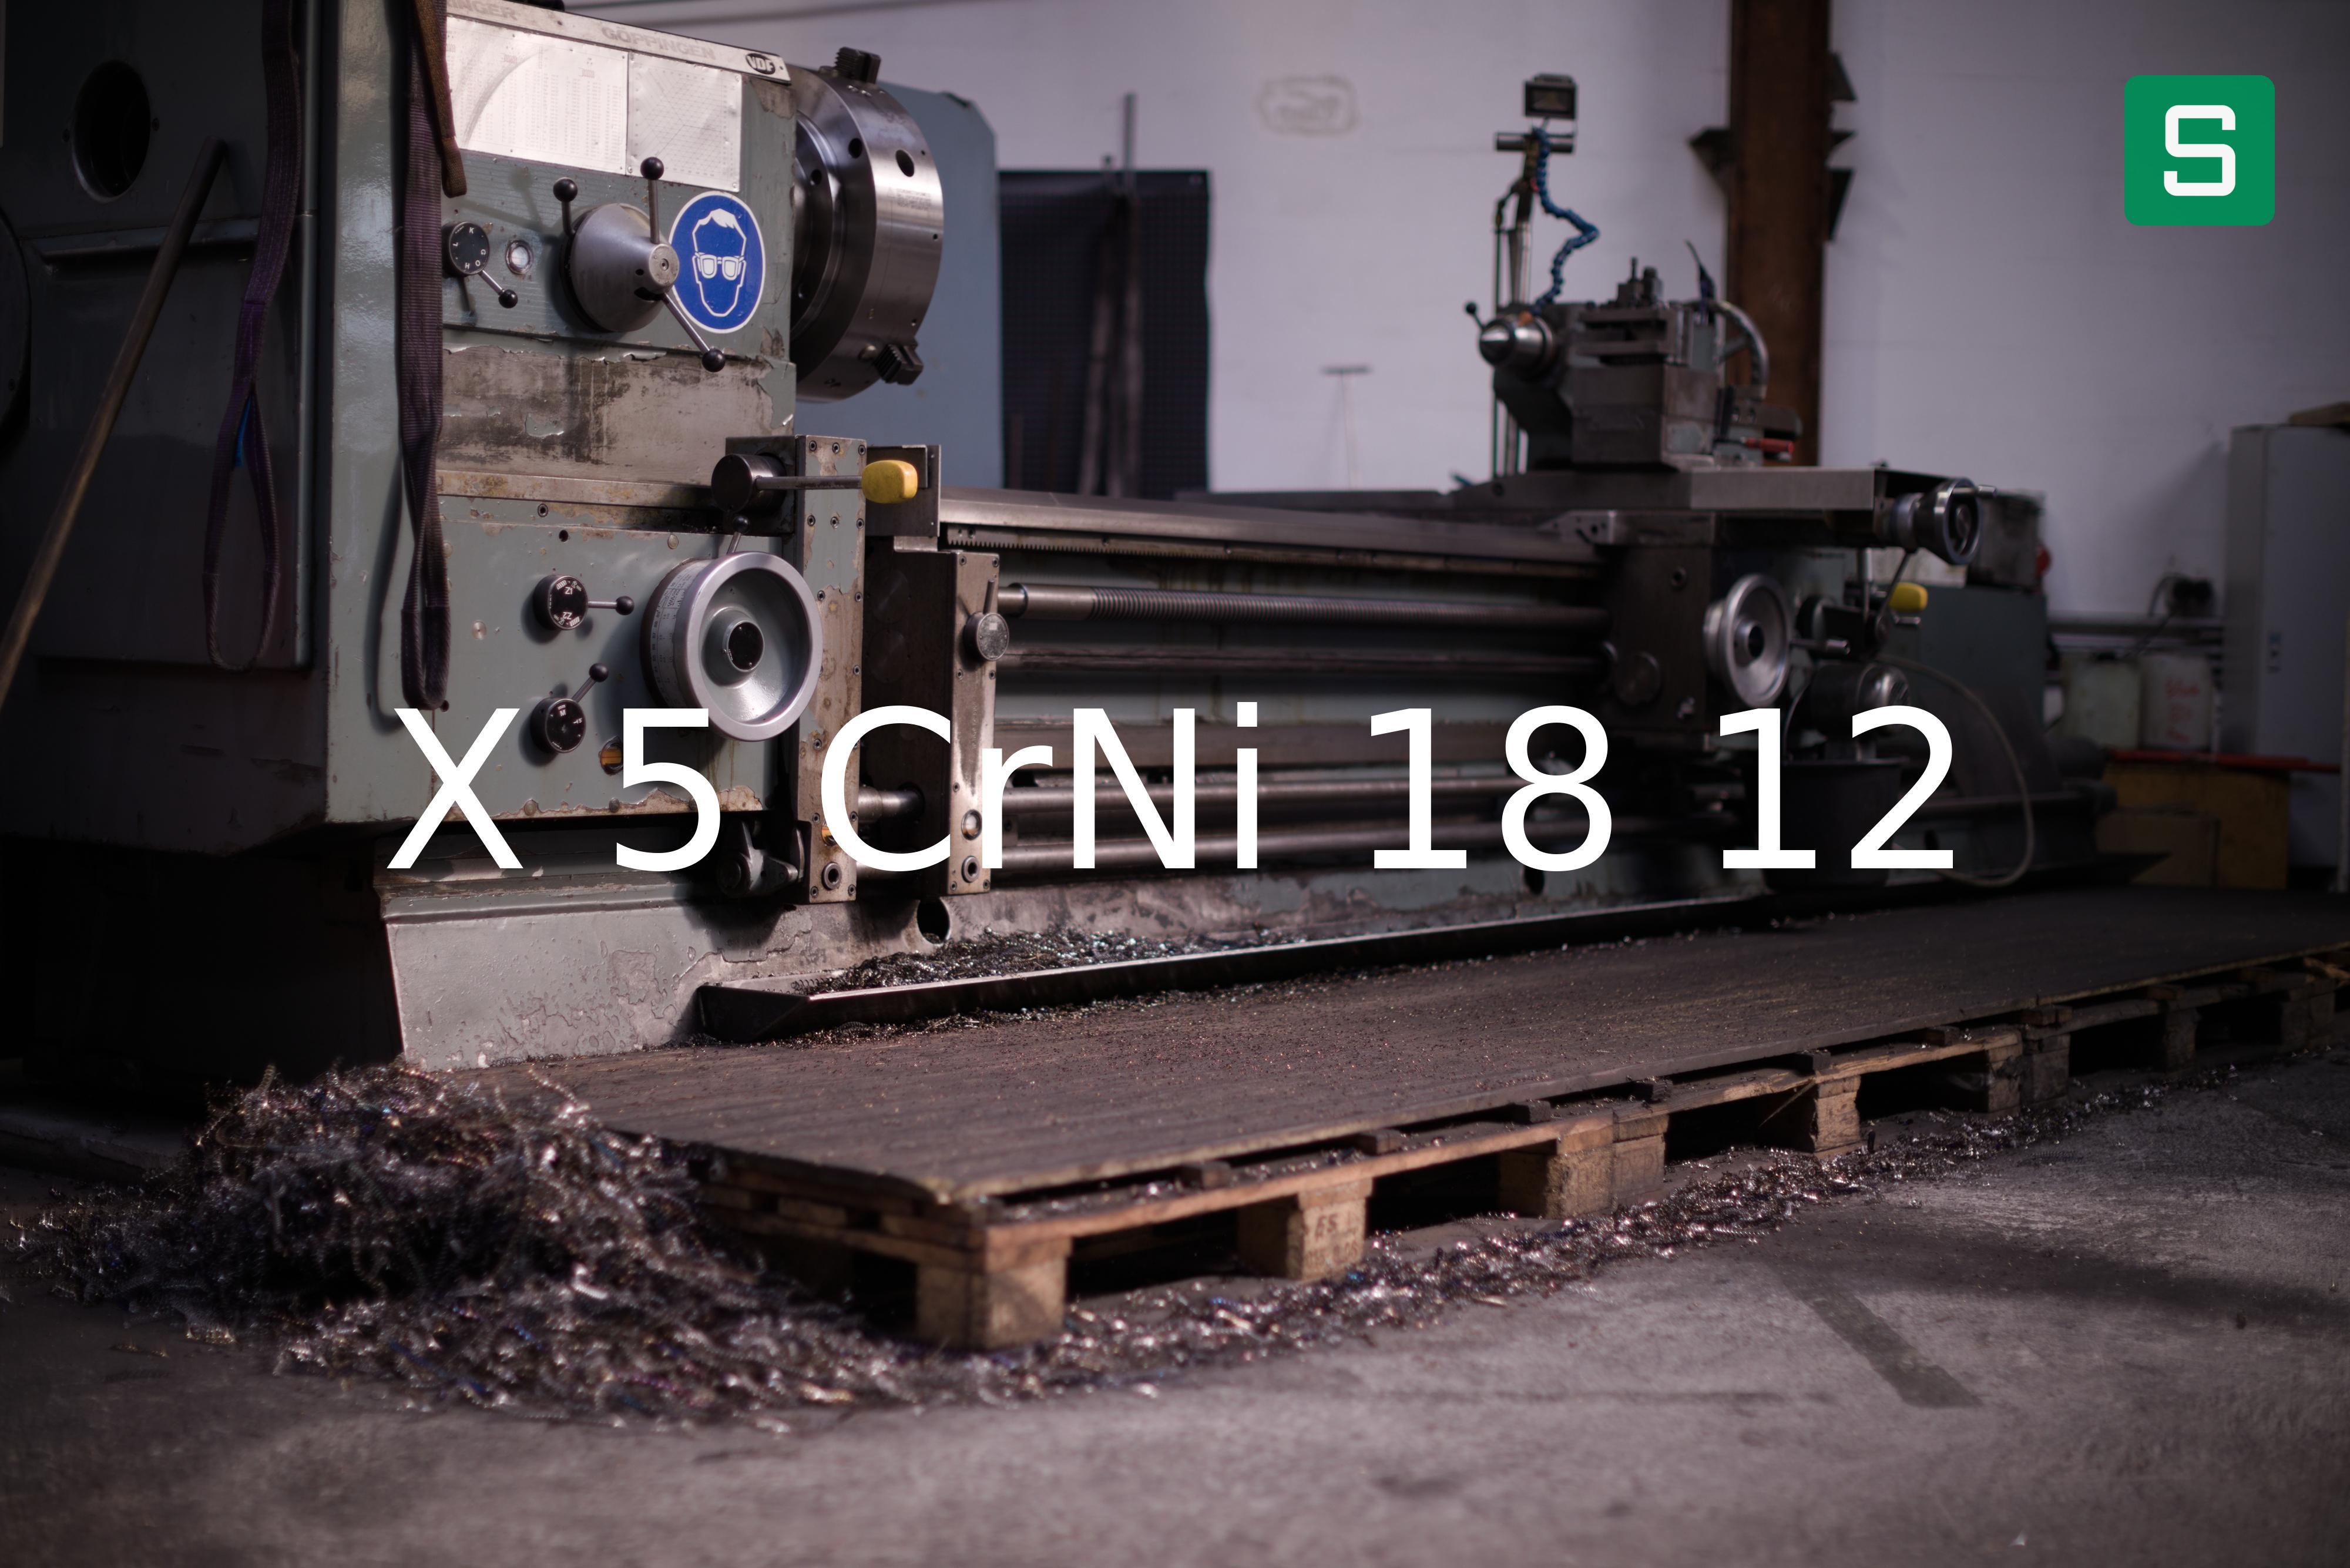 Steel Material: X 5 CrNi 18 12